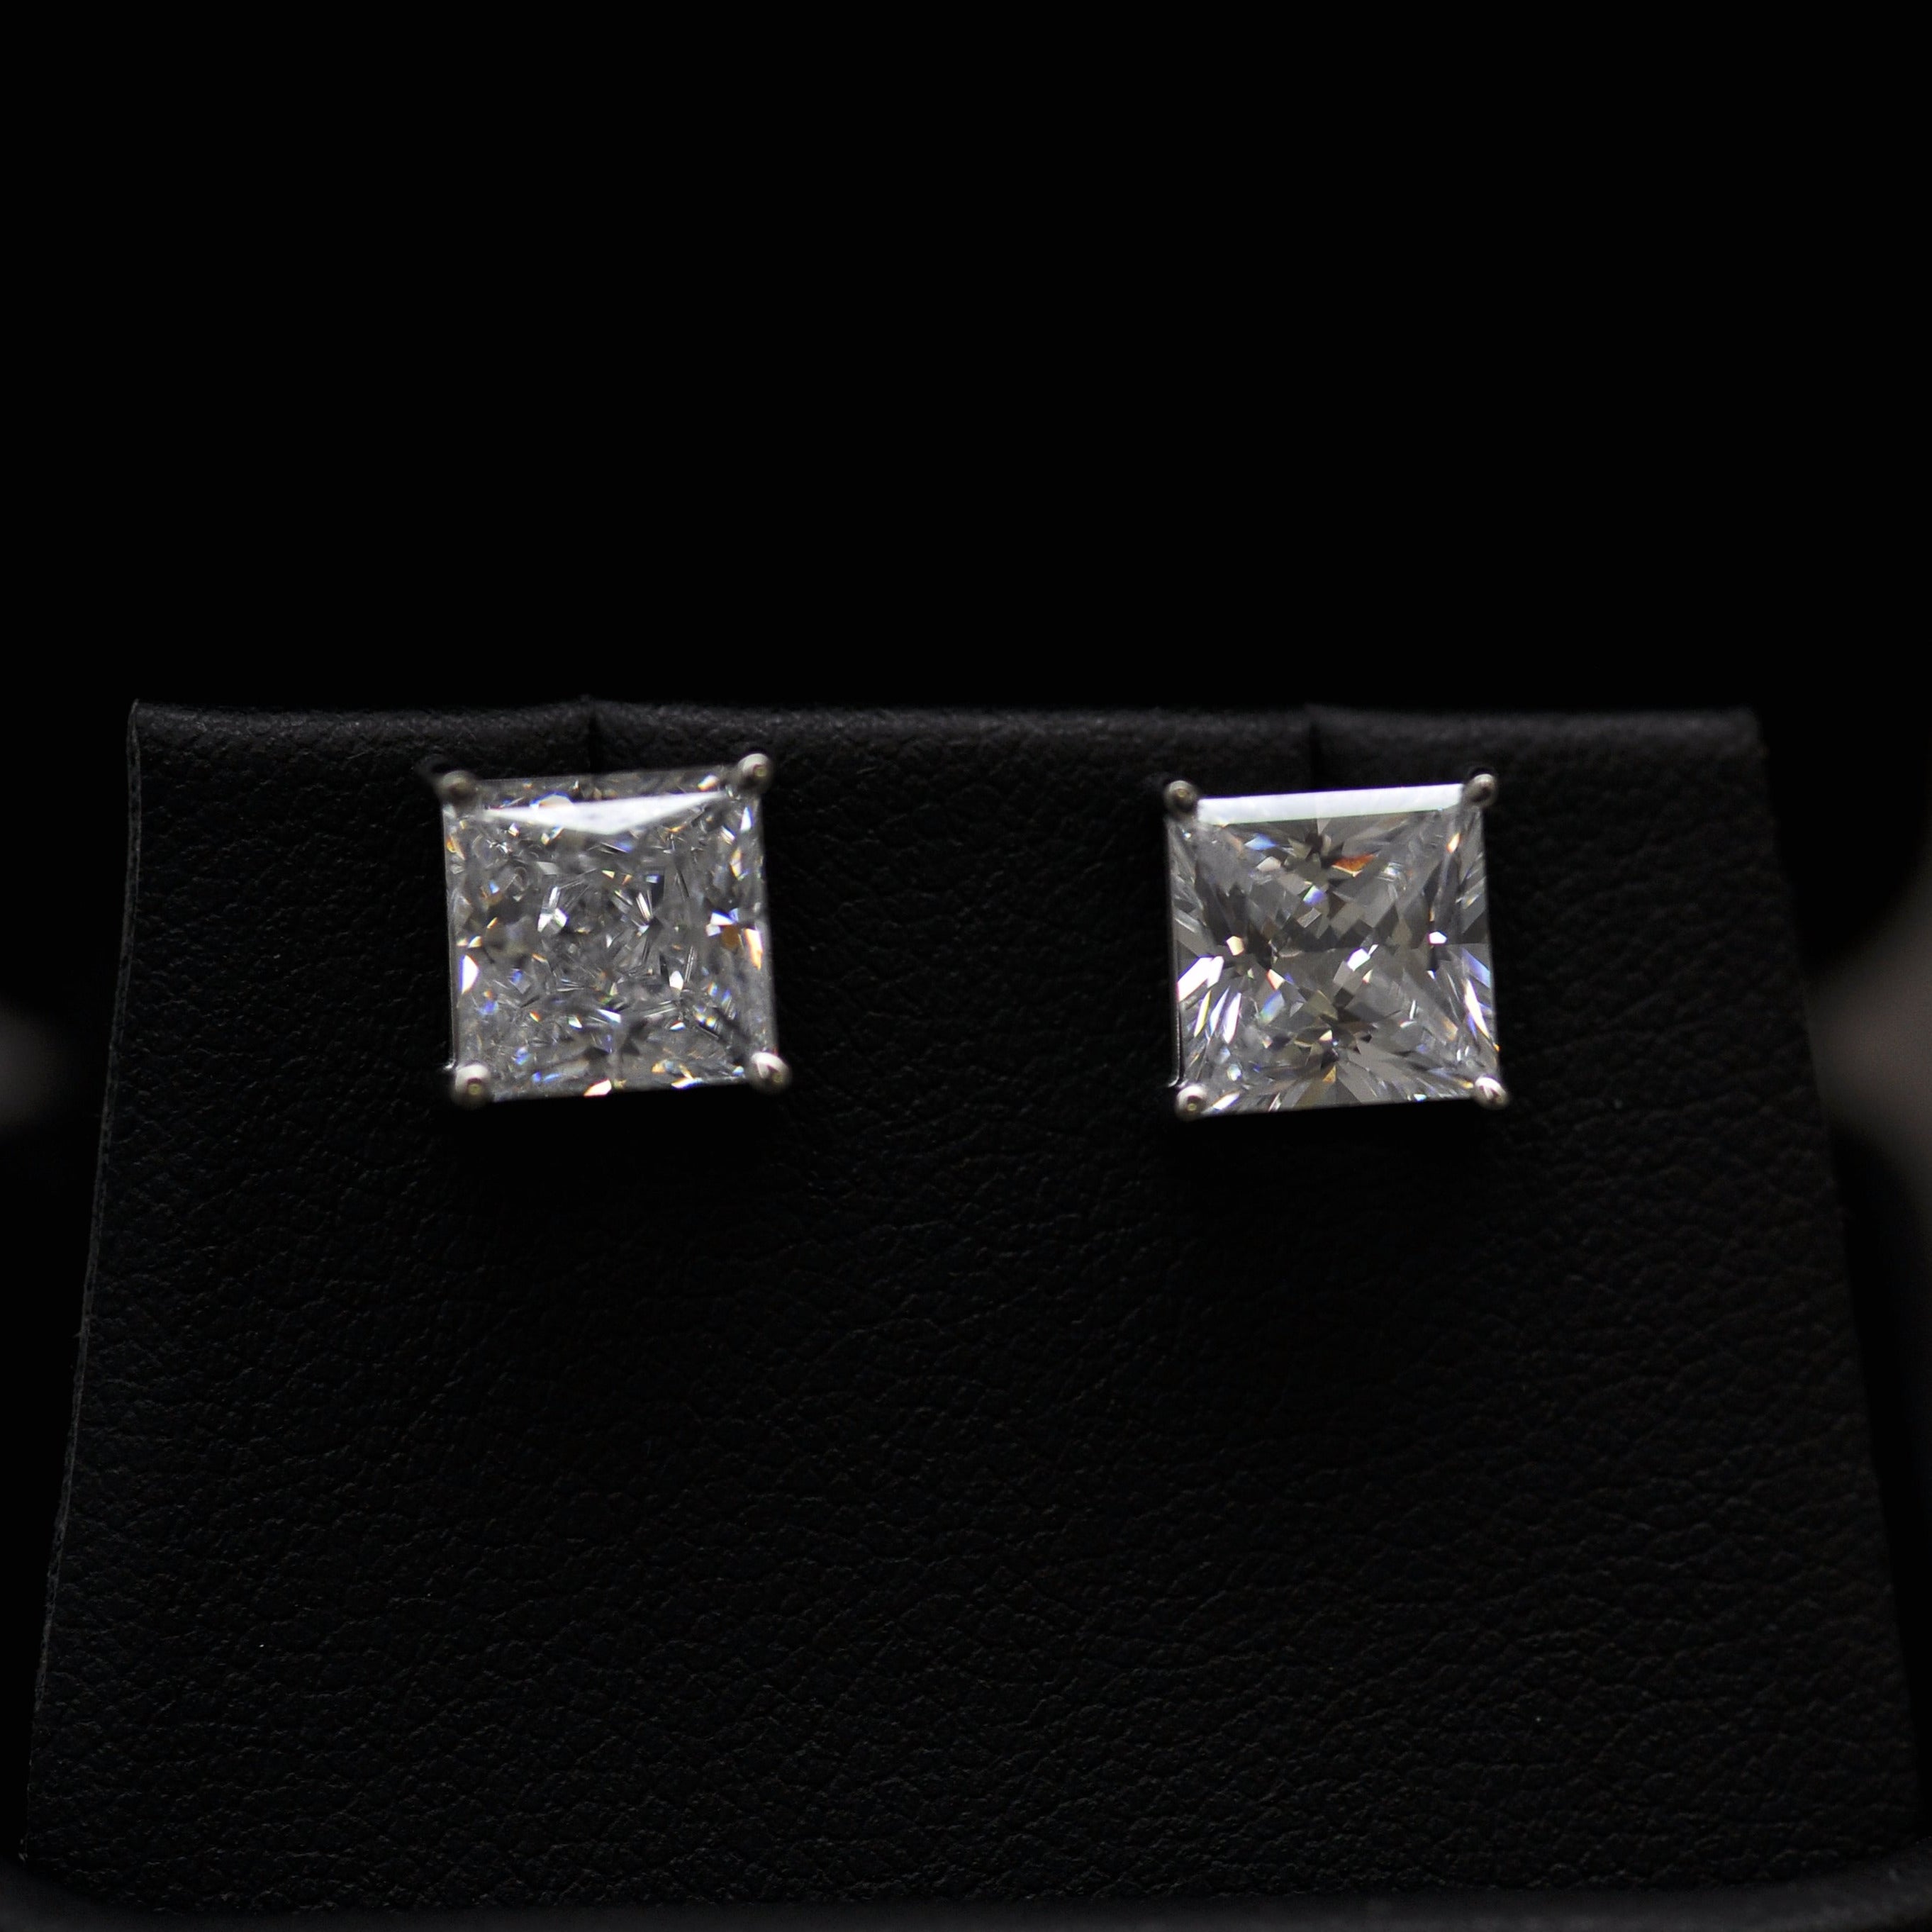 Cubic Zirconia Earrings- *Clearance* 4.0 Carat TGW 4 Prong Princess CZ Stud Earring Set in 18K White Gold